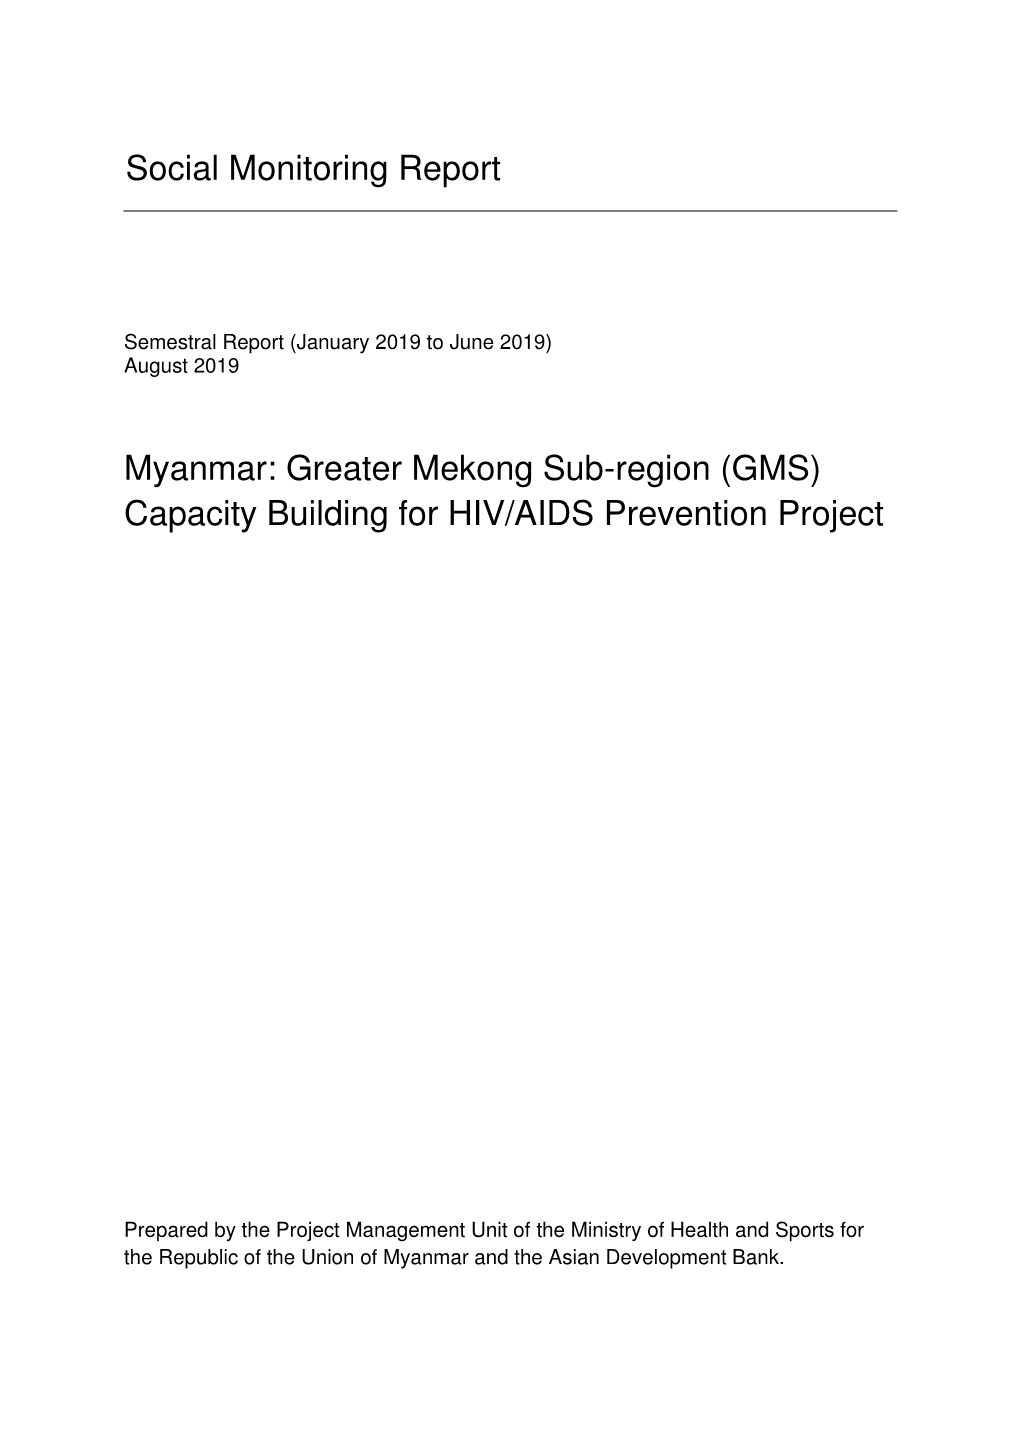 Greater Mekong Subregion Capacity Building